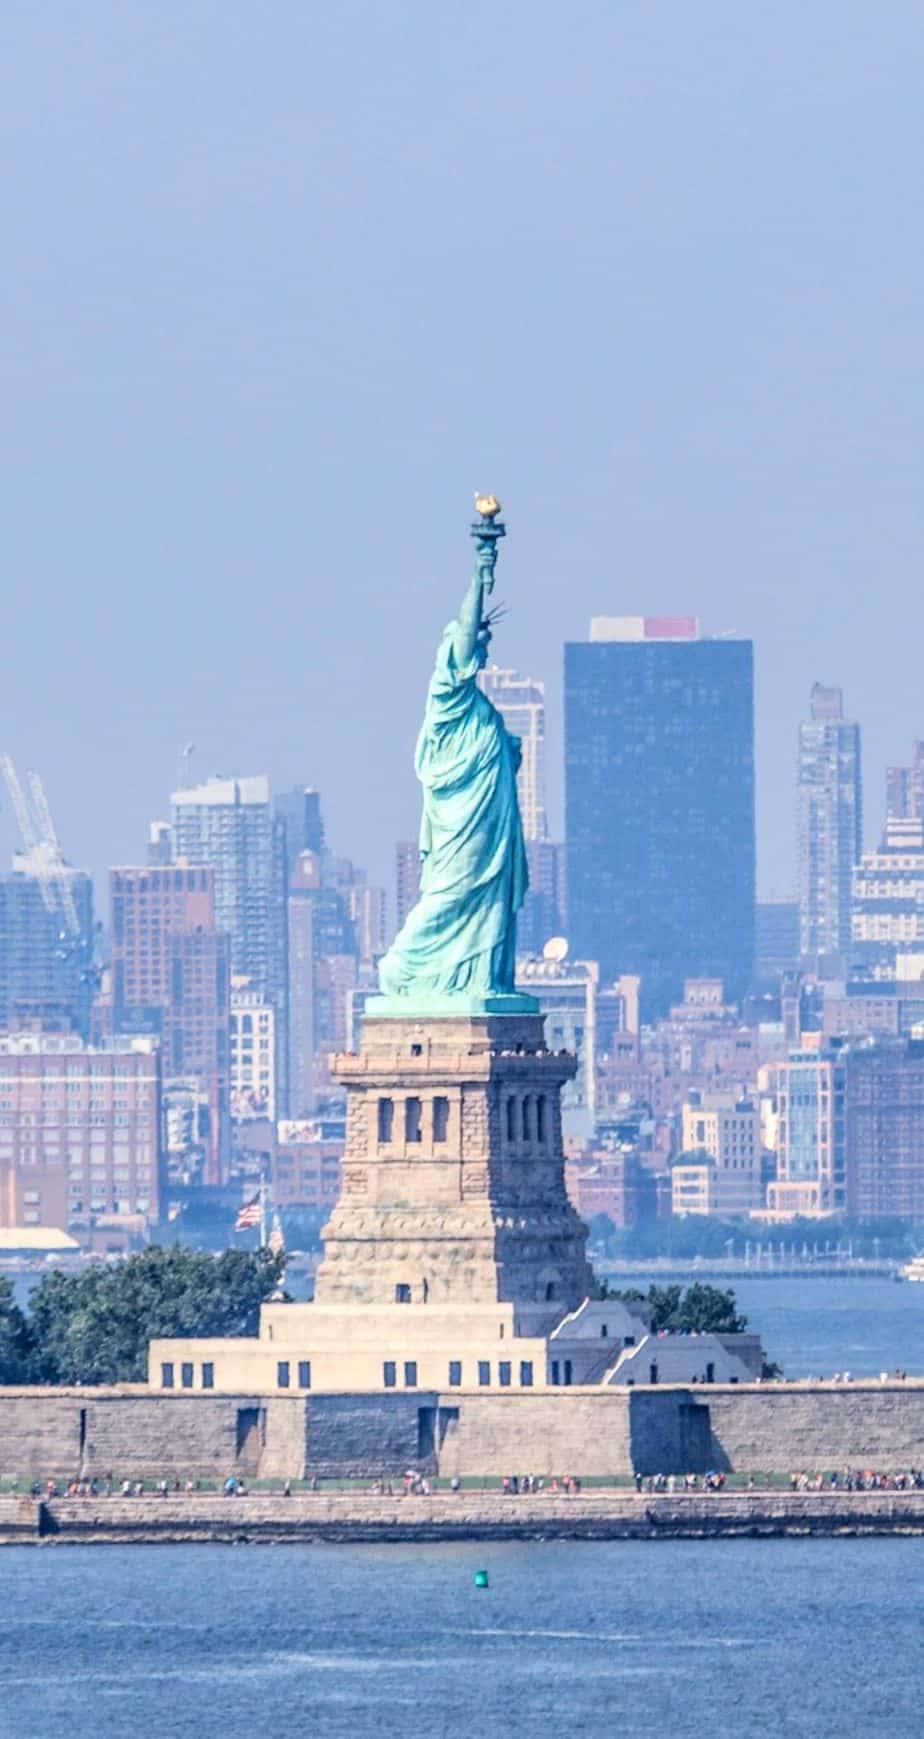 Fondode Pantalla De La Estatua De La Libertad, La Mejor Imagen De Nueva York.